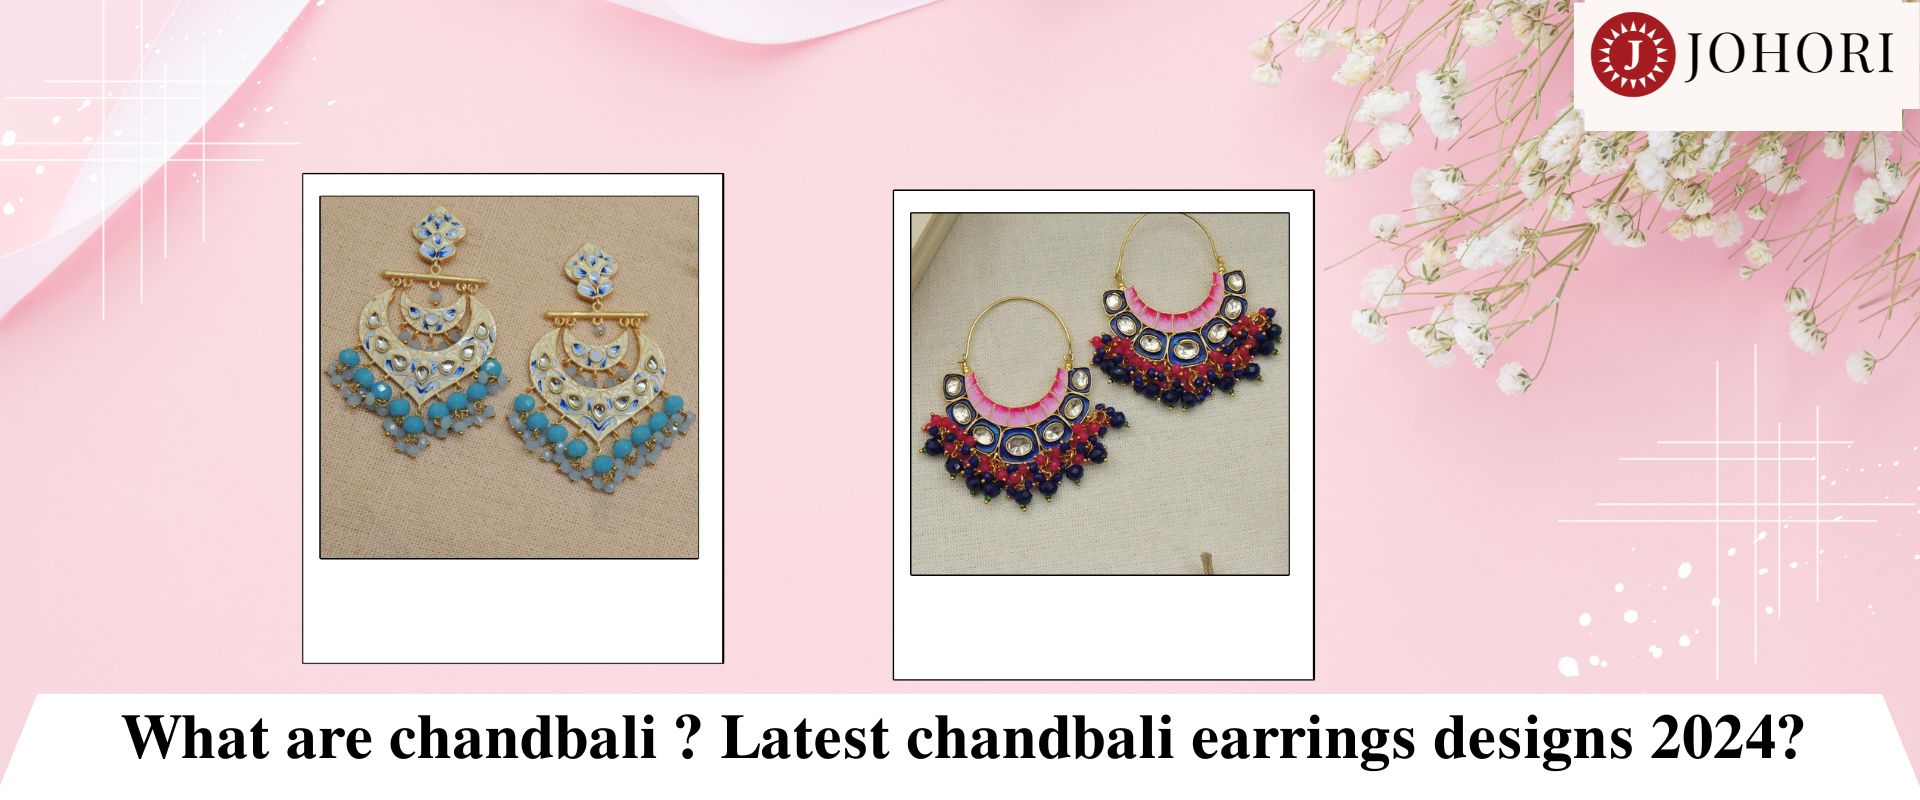 What are chandbali ? Latest chandbali earrings designs 2024?